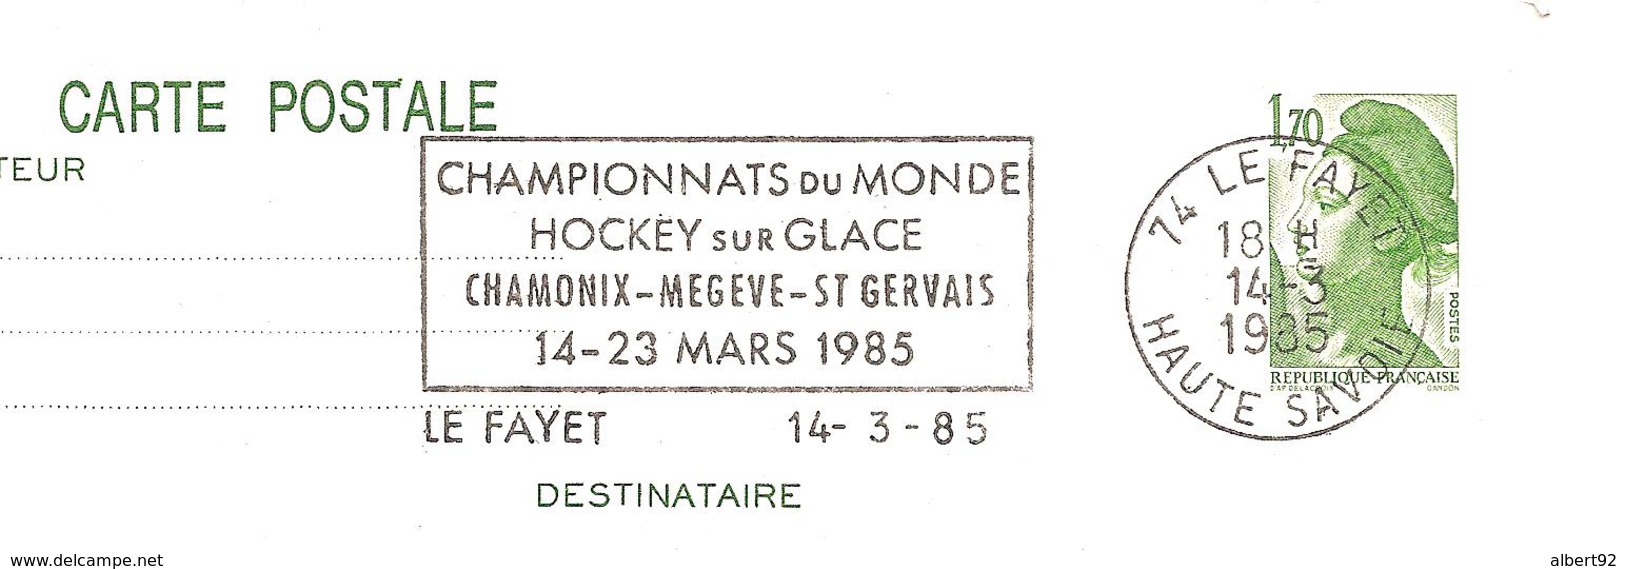 1985 Championnats Du Monde Hockey Sur Glace ;Chamonix,St Gervais;flamme Annonce Du Fayet - Eishockey